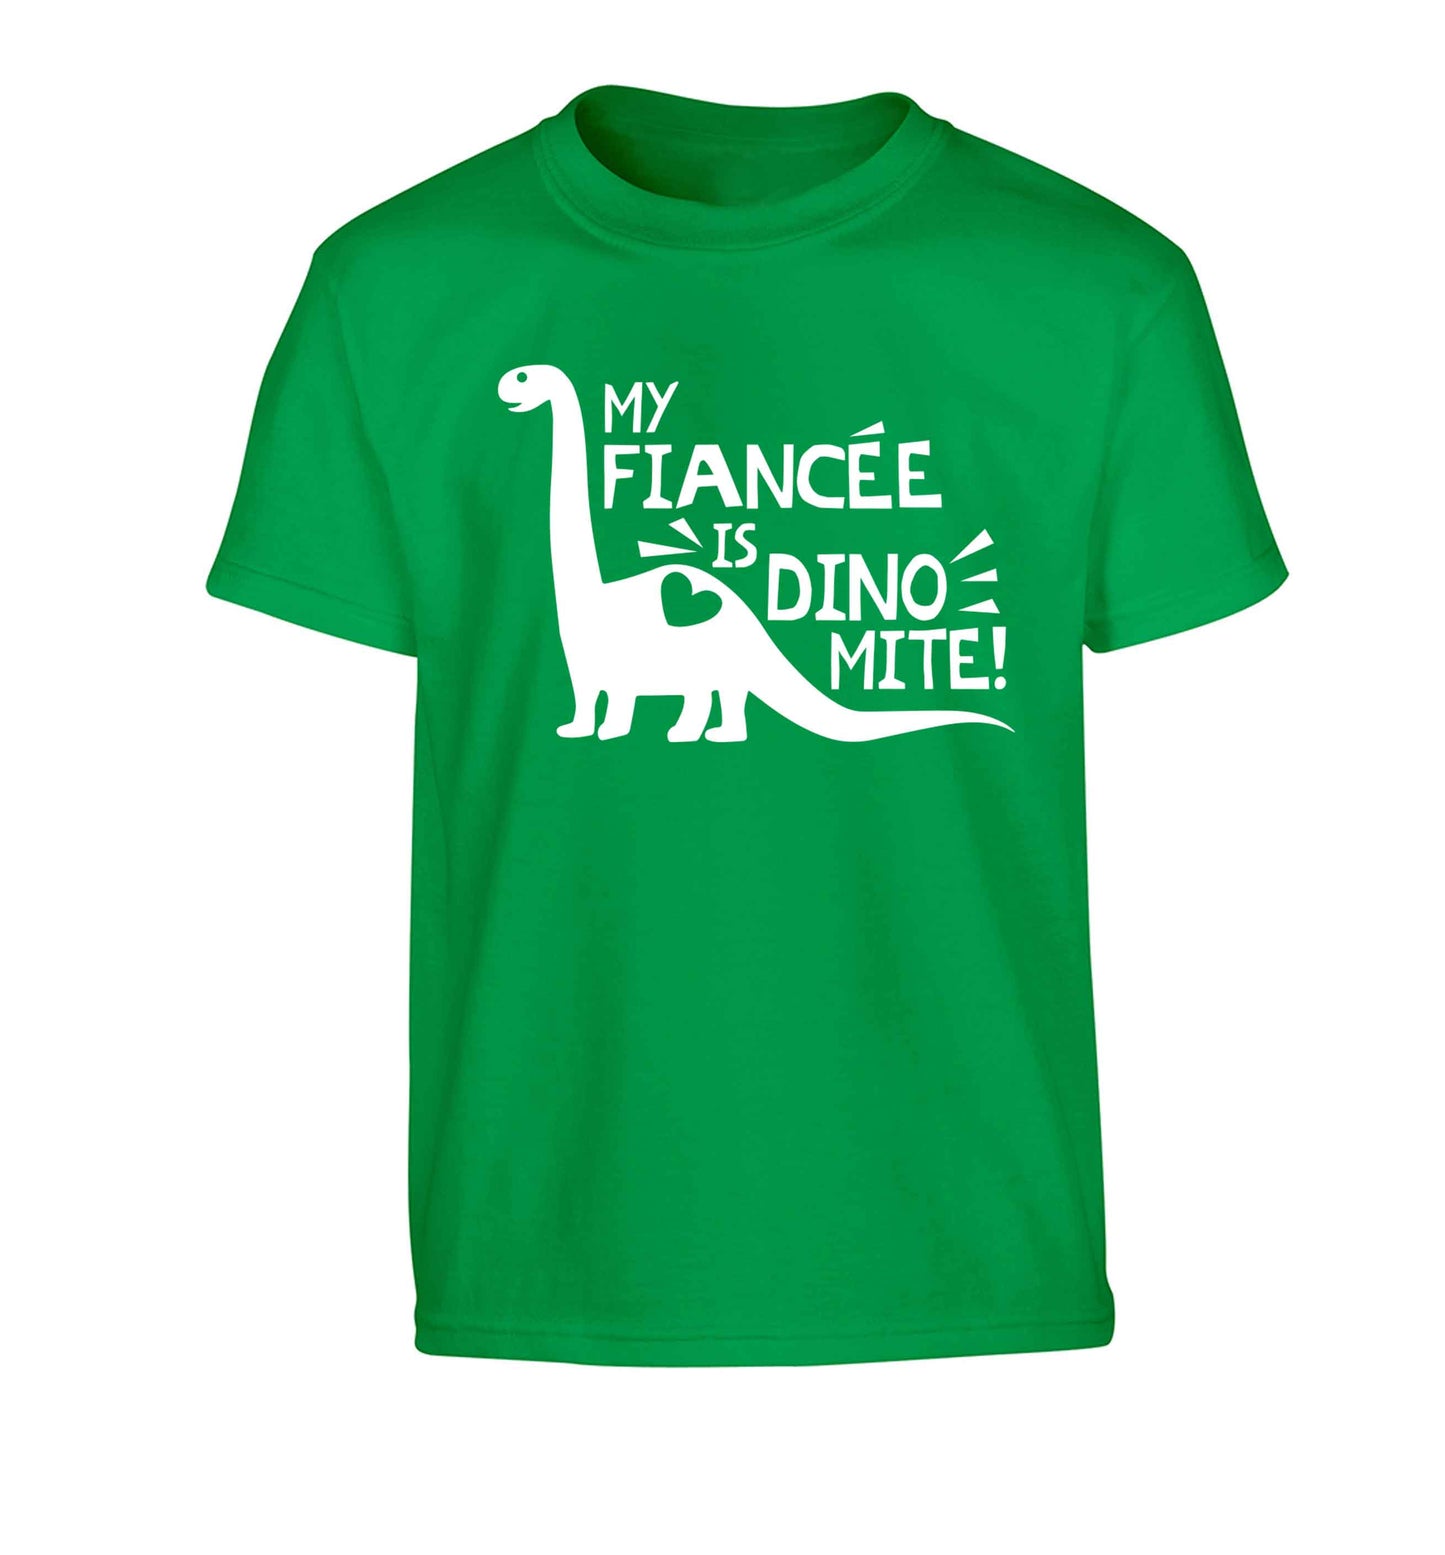 My fiancee is dinomite! Children's green Tshirt 12-13 Years